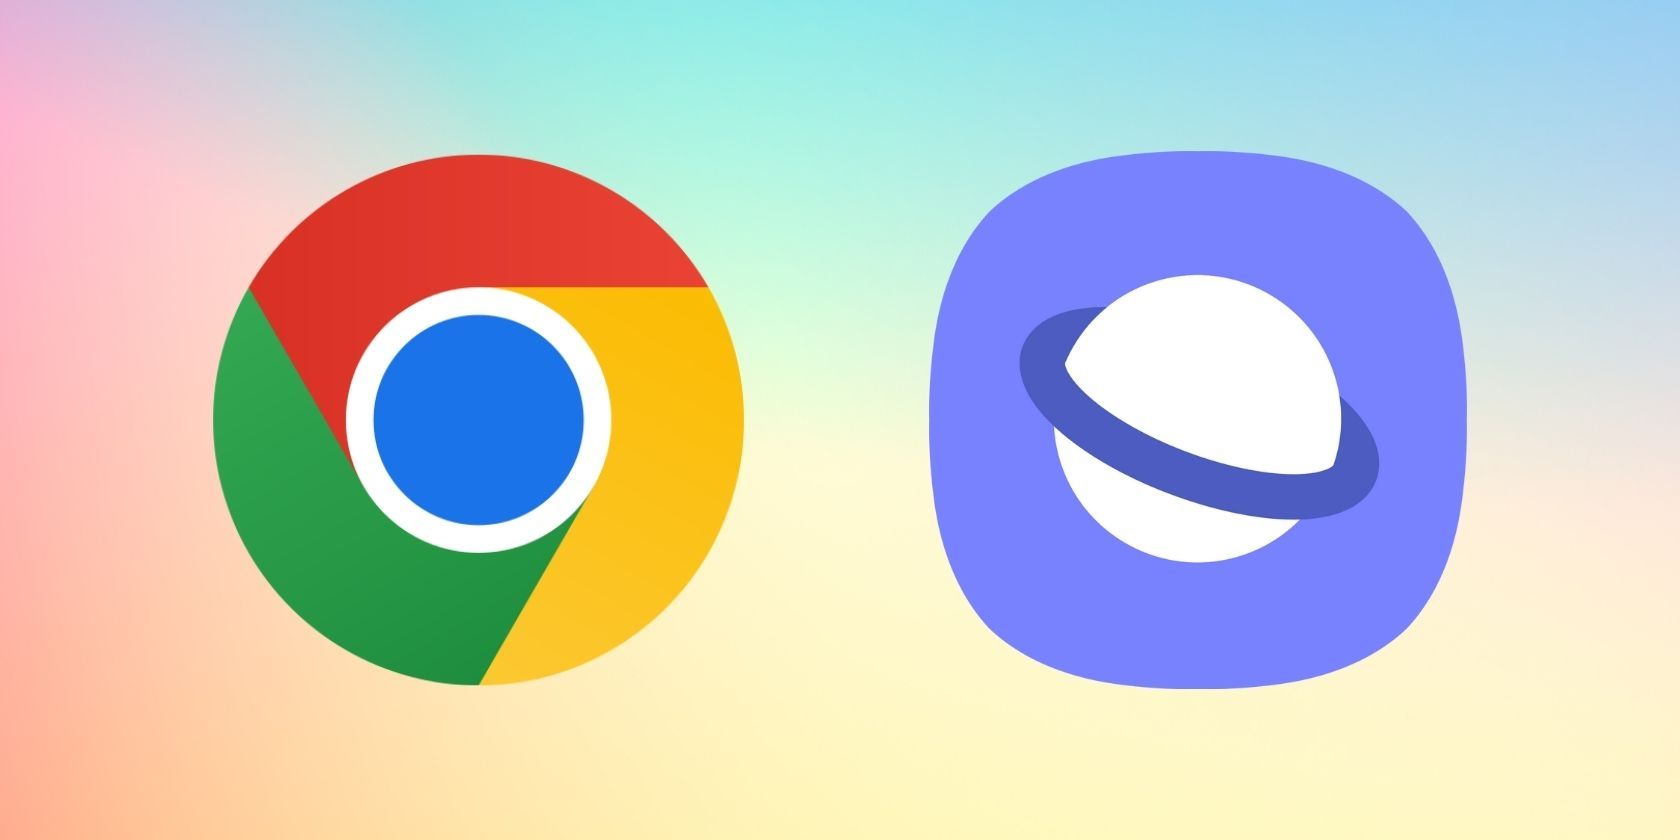 Google Chrome vs. Samsung Internet featured image